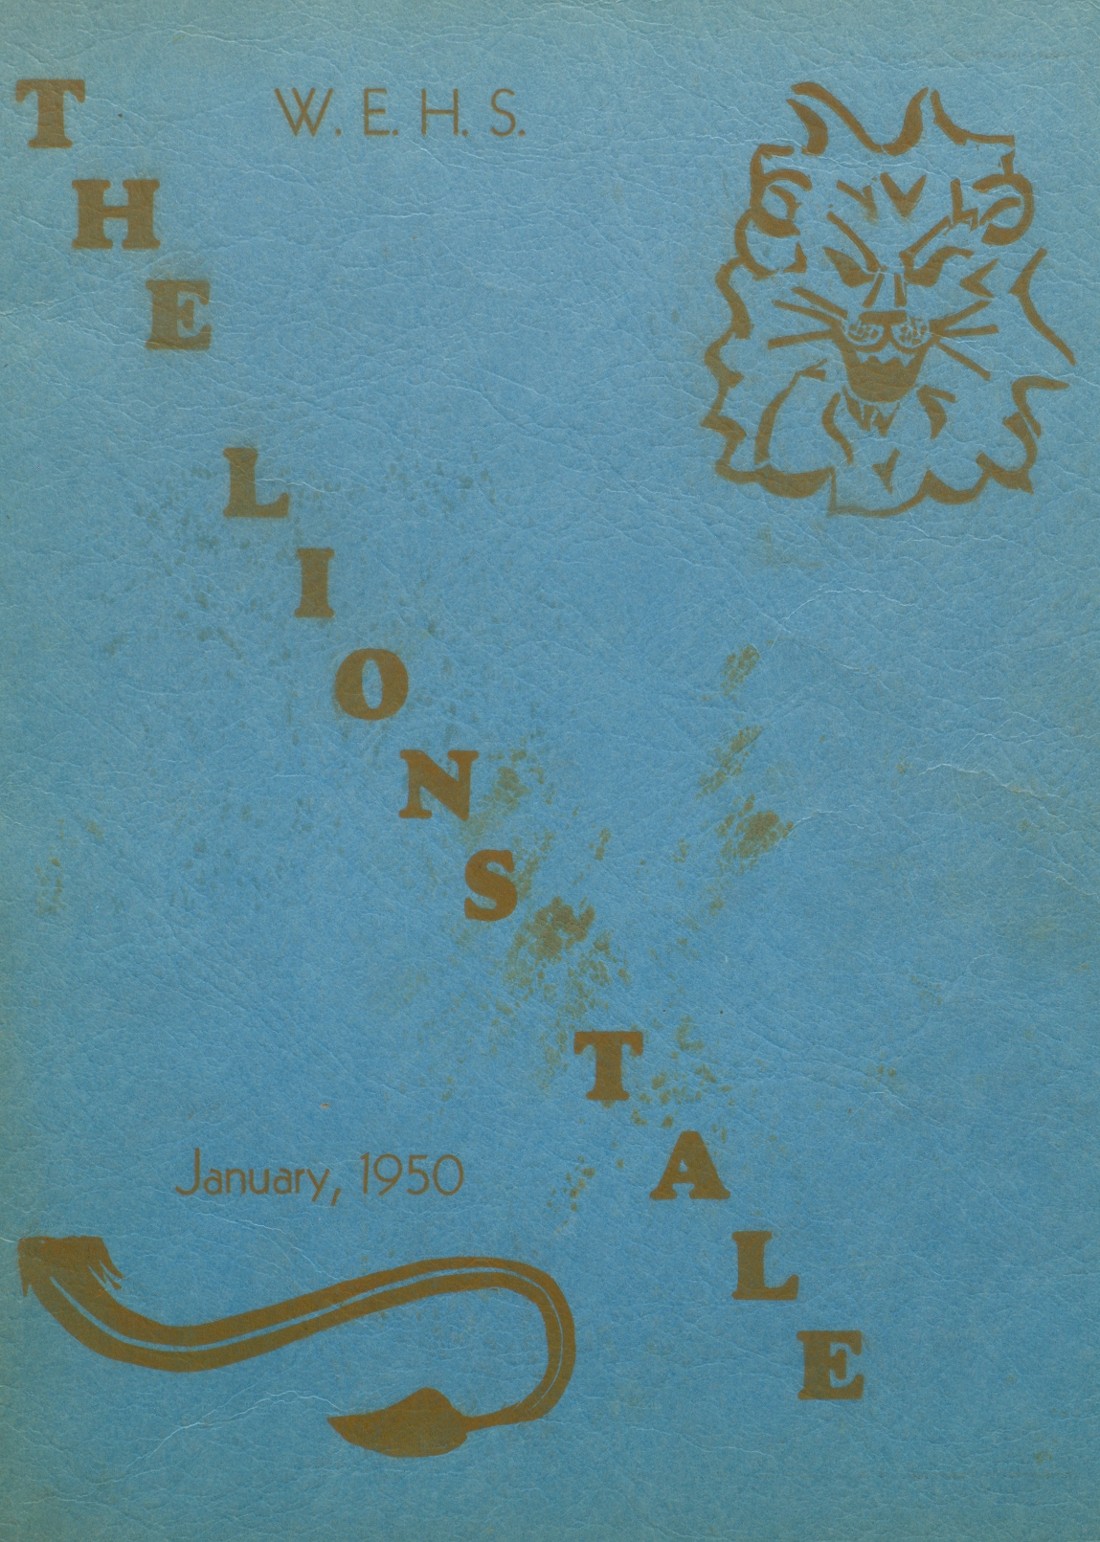 1972 yearbook from Pittman Junior High School from Hueytown, Alabama ...